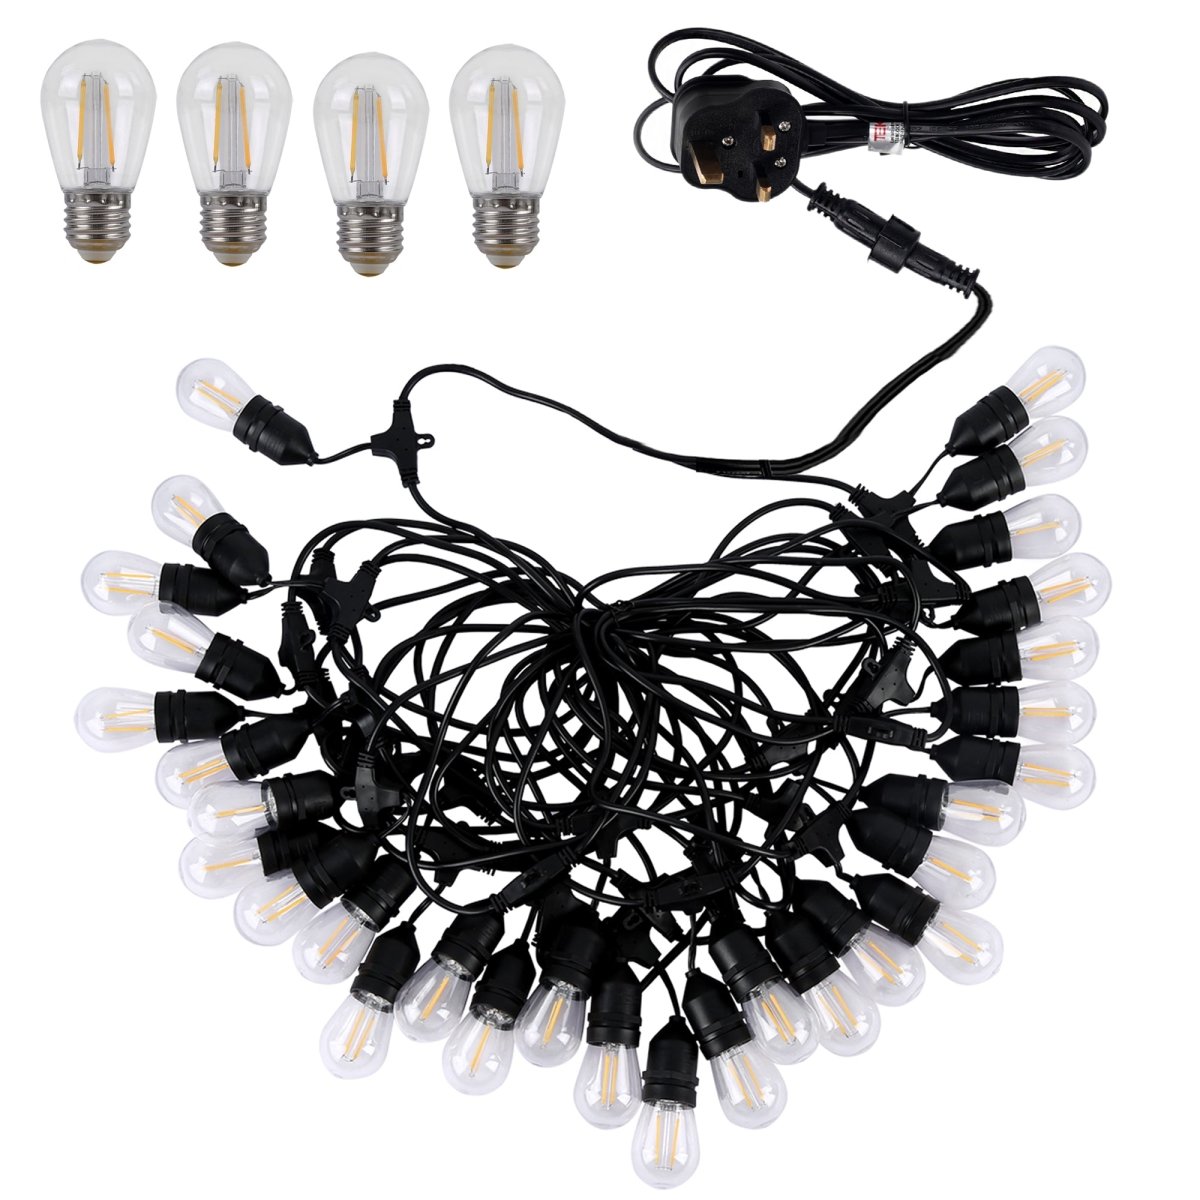 main image of pollux festoon light set e27 s12 bulbs 30 bulbs led bulb string light